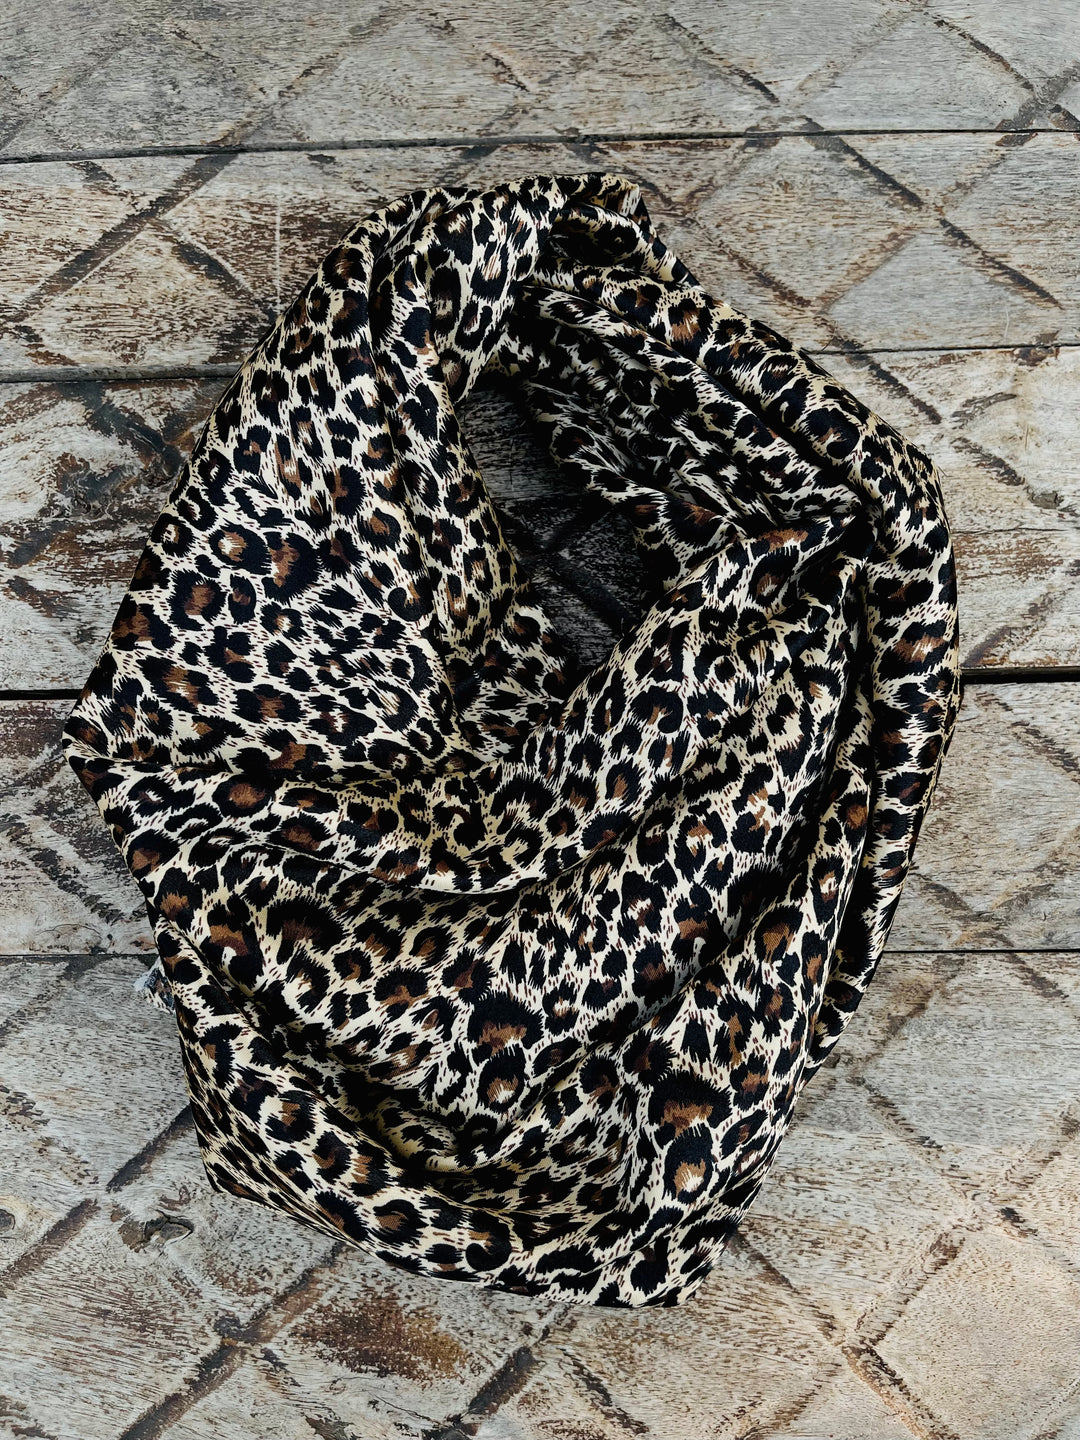 Charmeuse satin fabric by the yard  -  Black brown gold cheetah  print